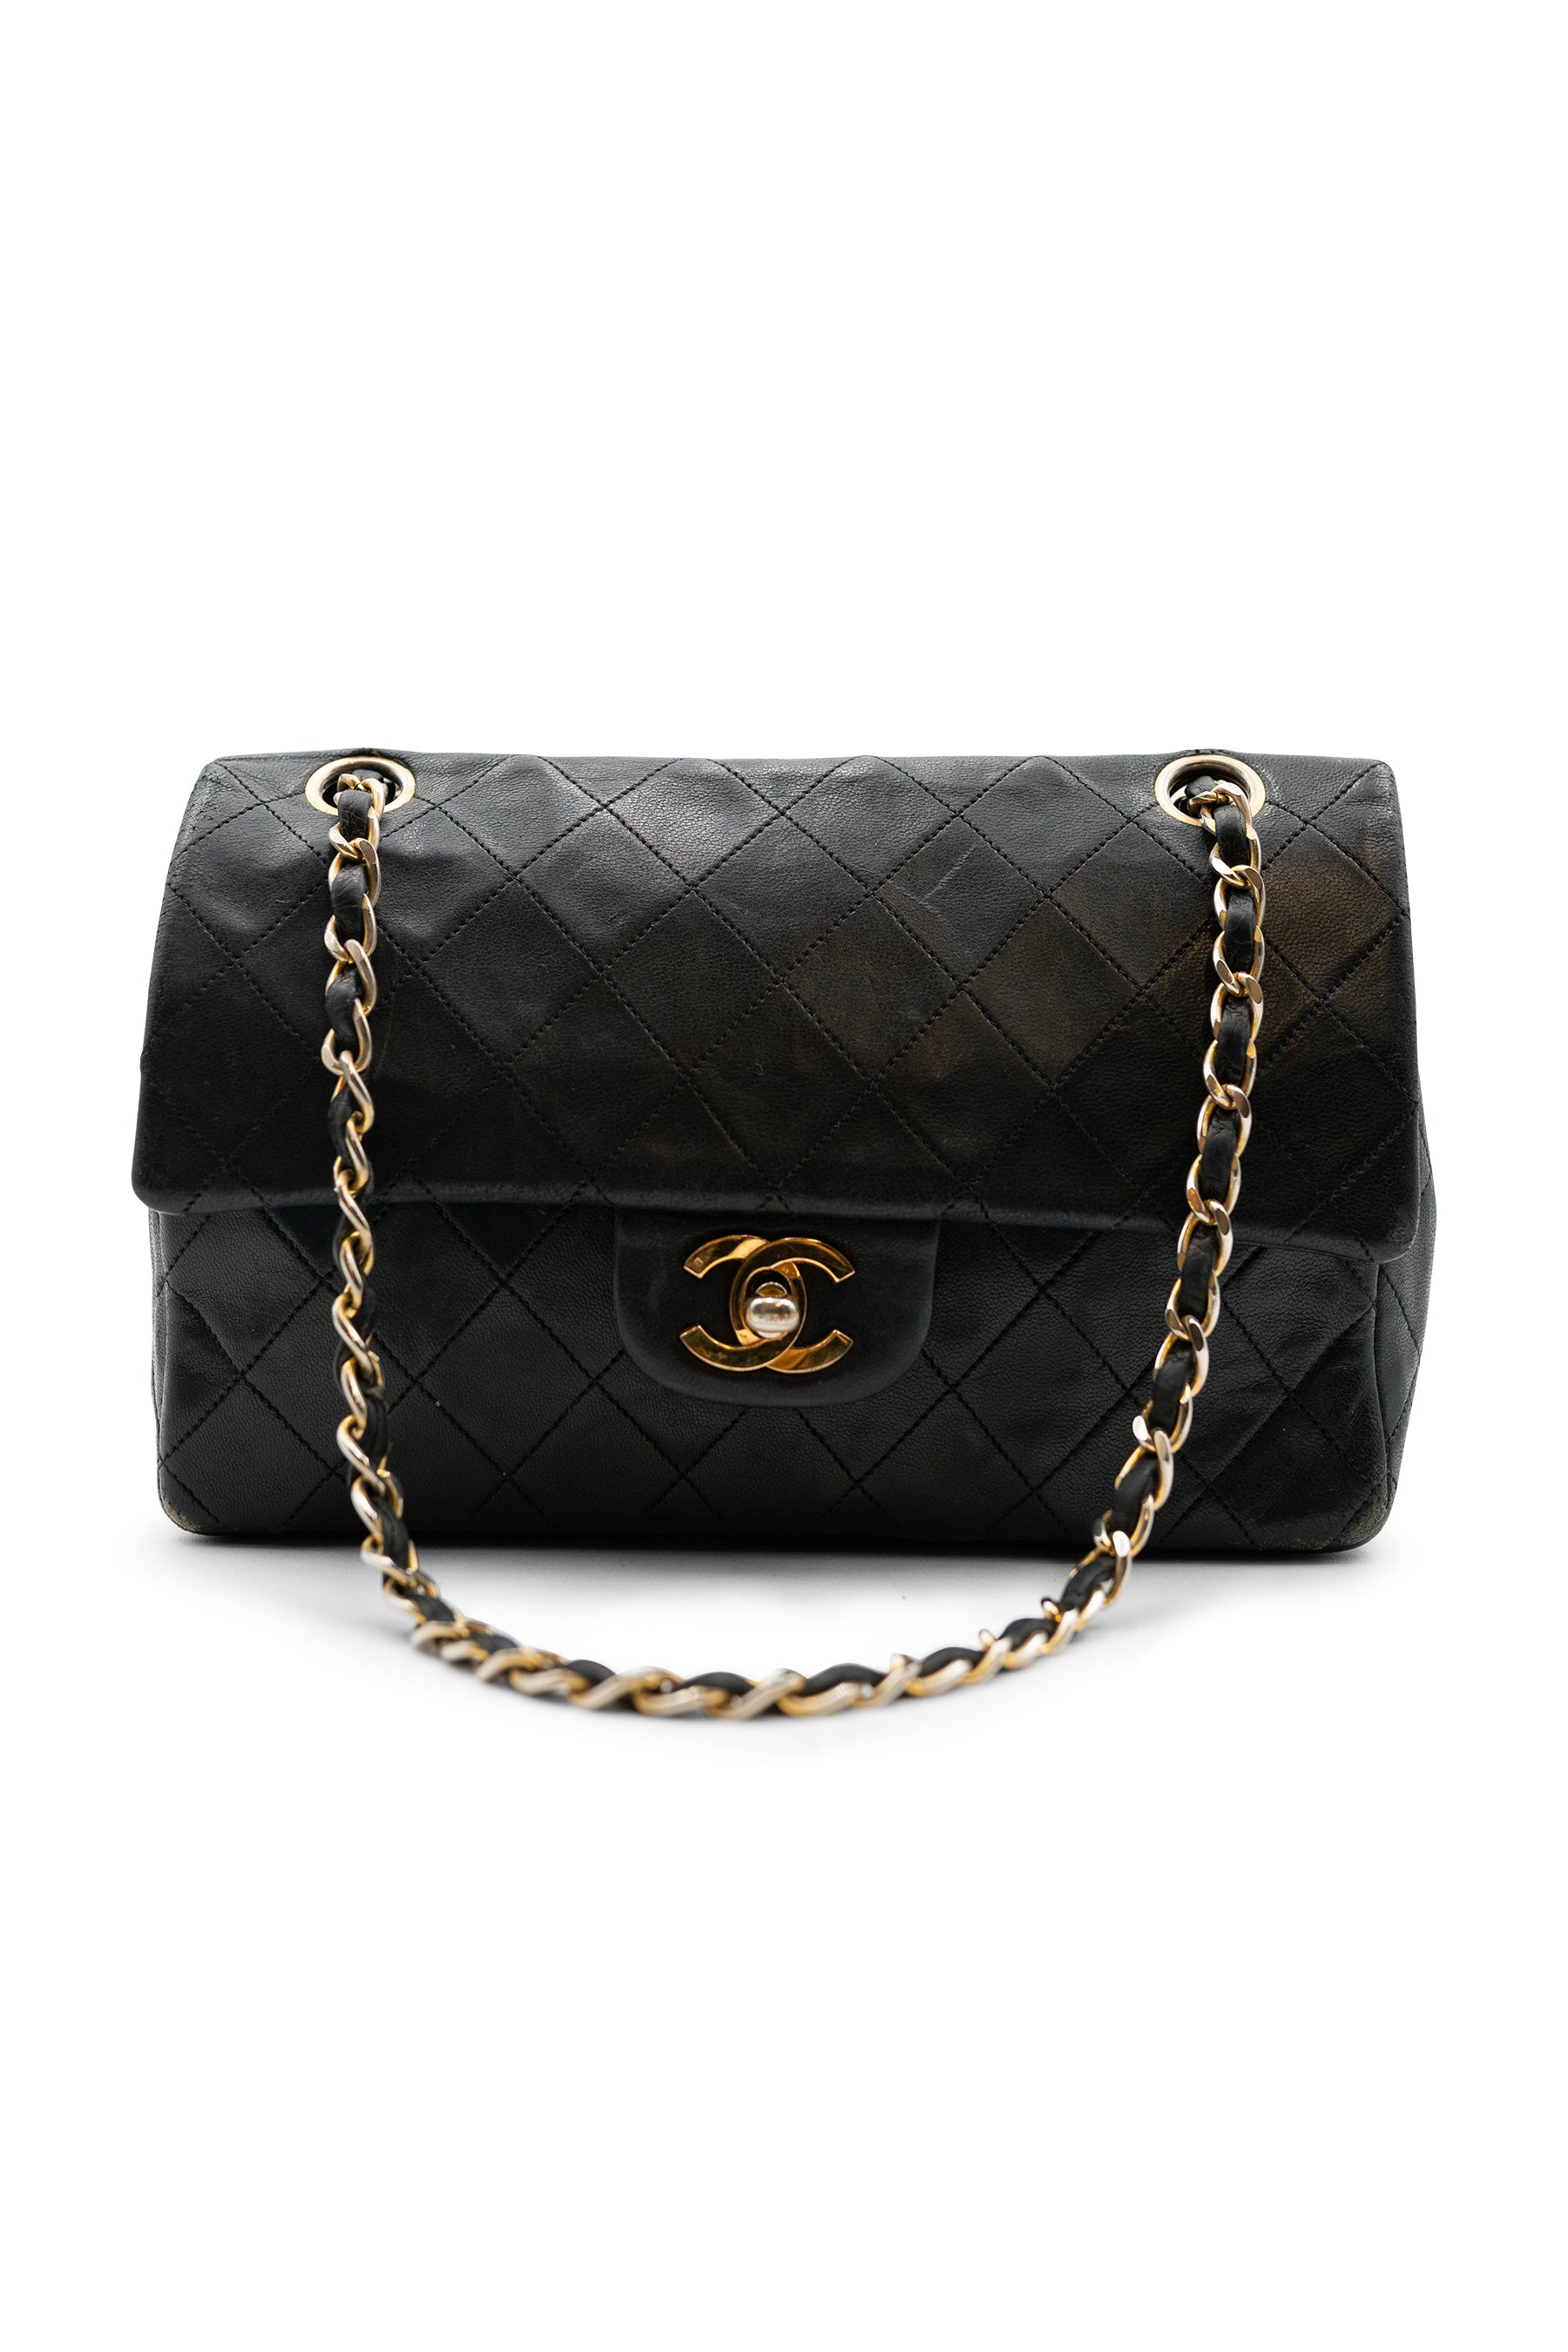 1990s Chanel Black Lambskin Leather Maxi Flap Bag